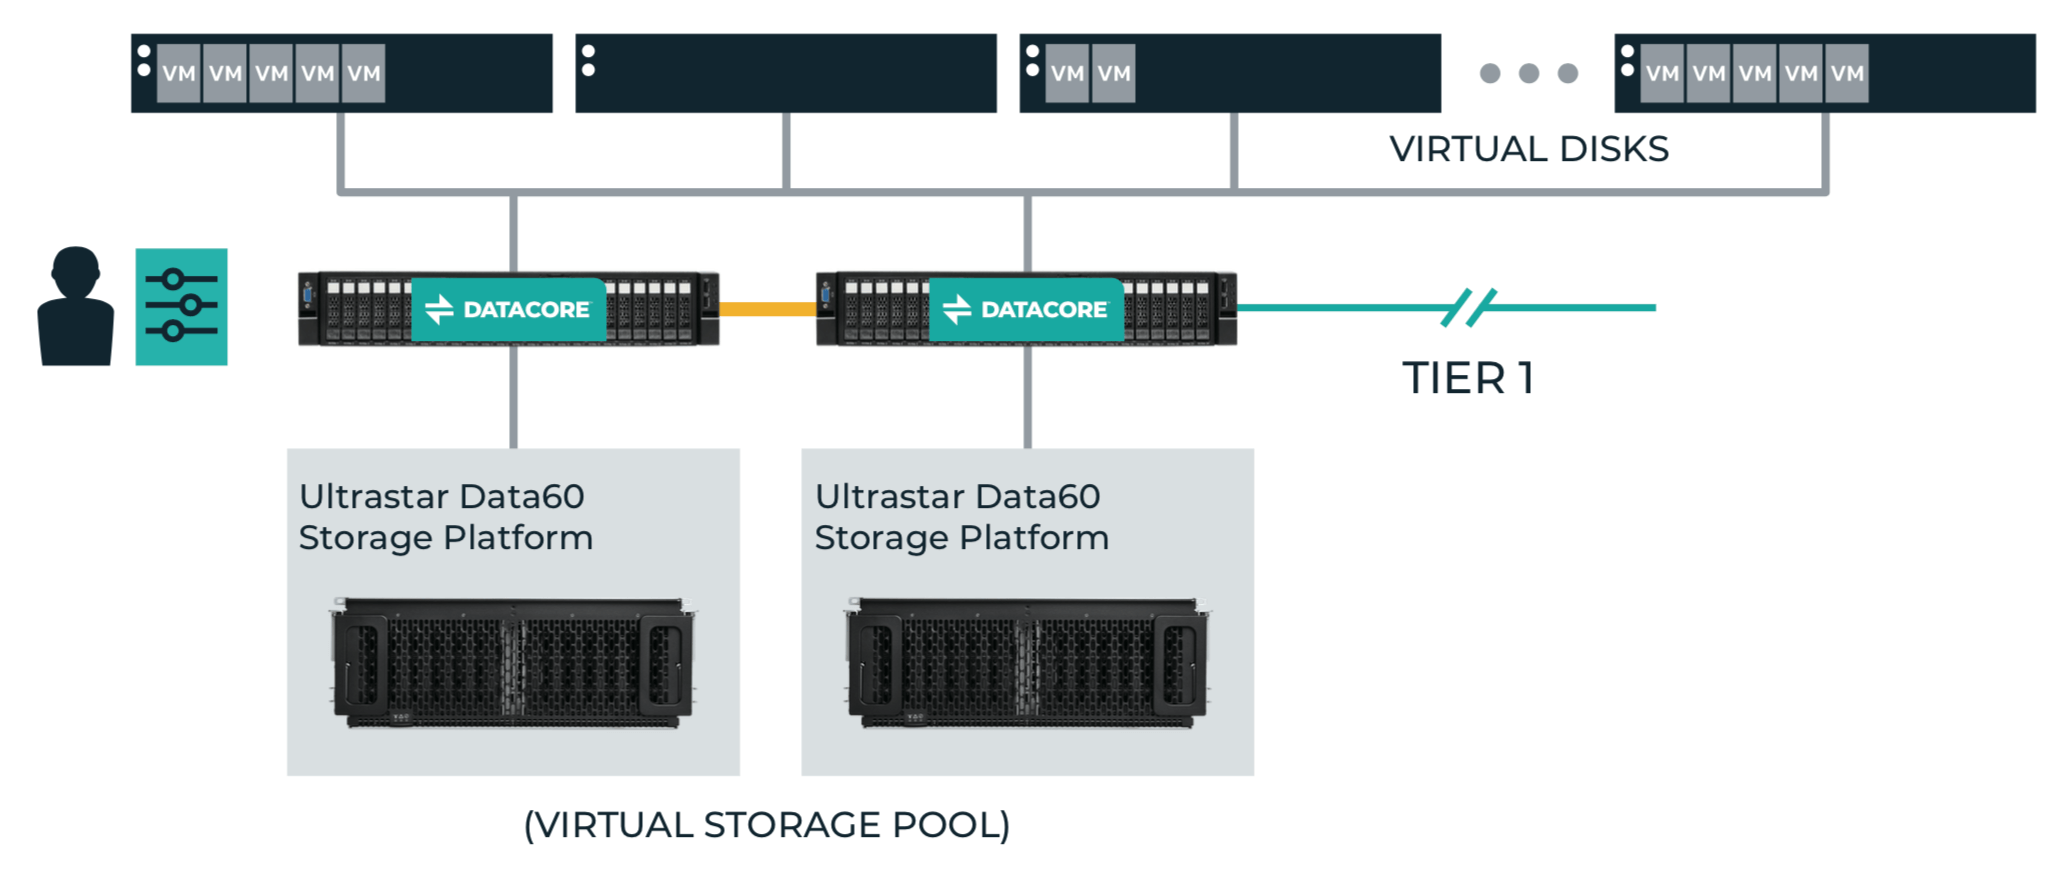 Ultrastar Data60 Storage Platform virtual storage pool